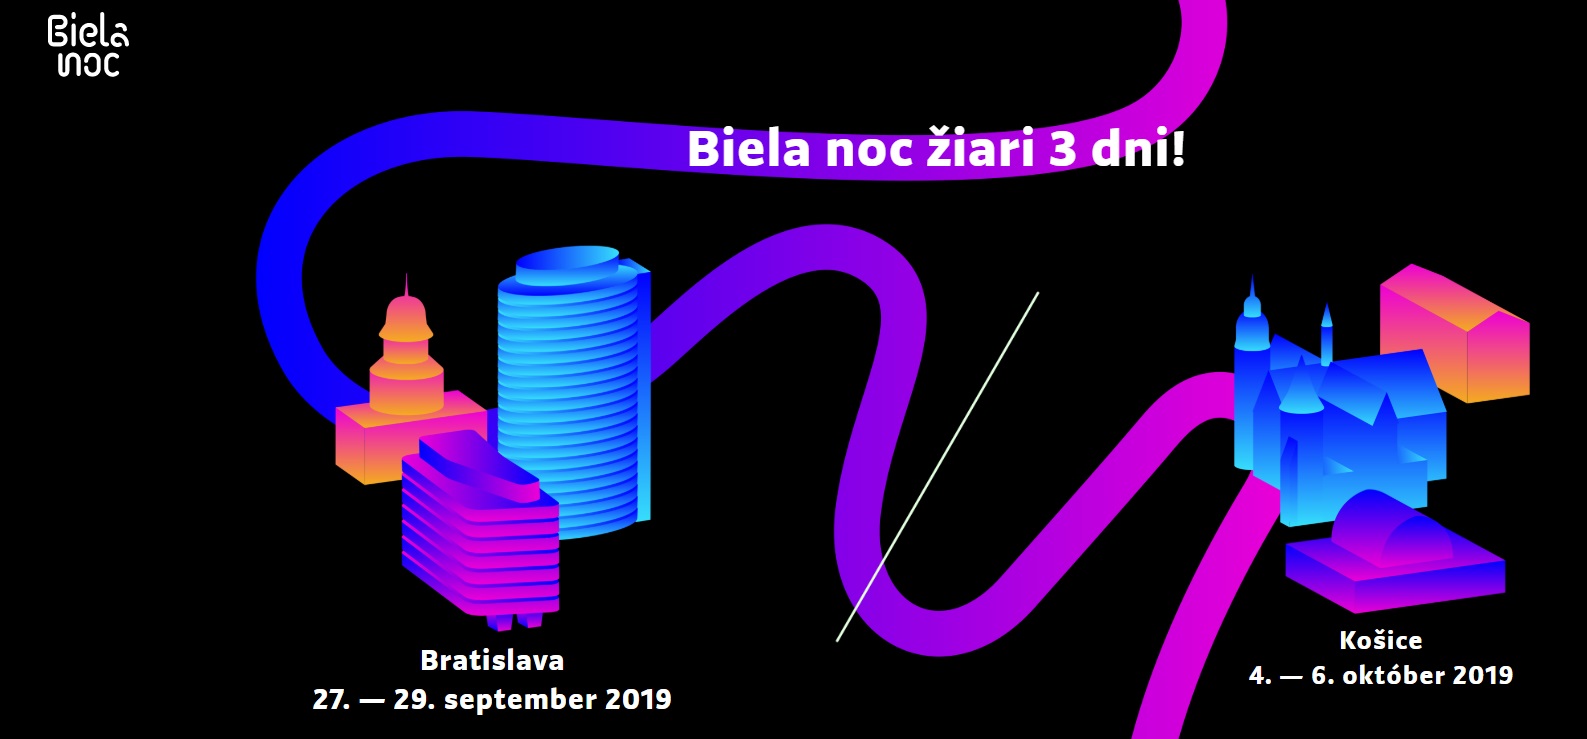 Biela noc Bratislava 2019 - 5. ročník